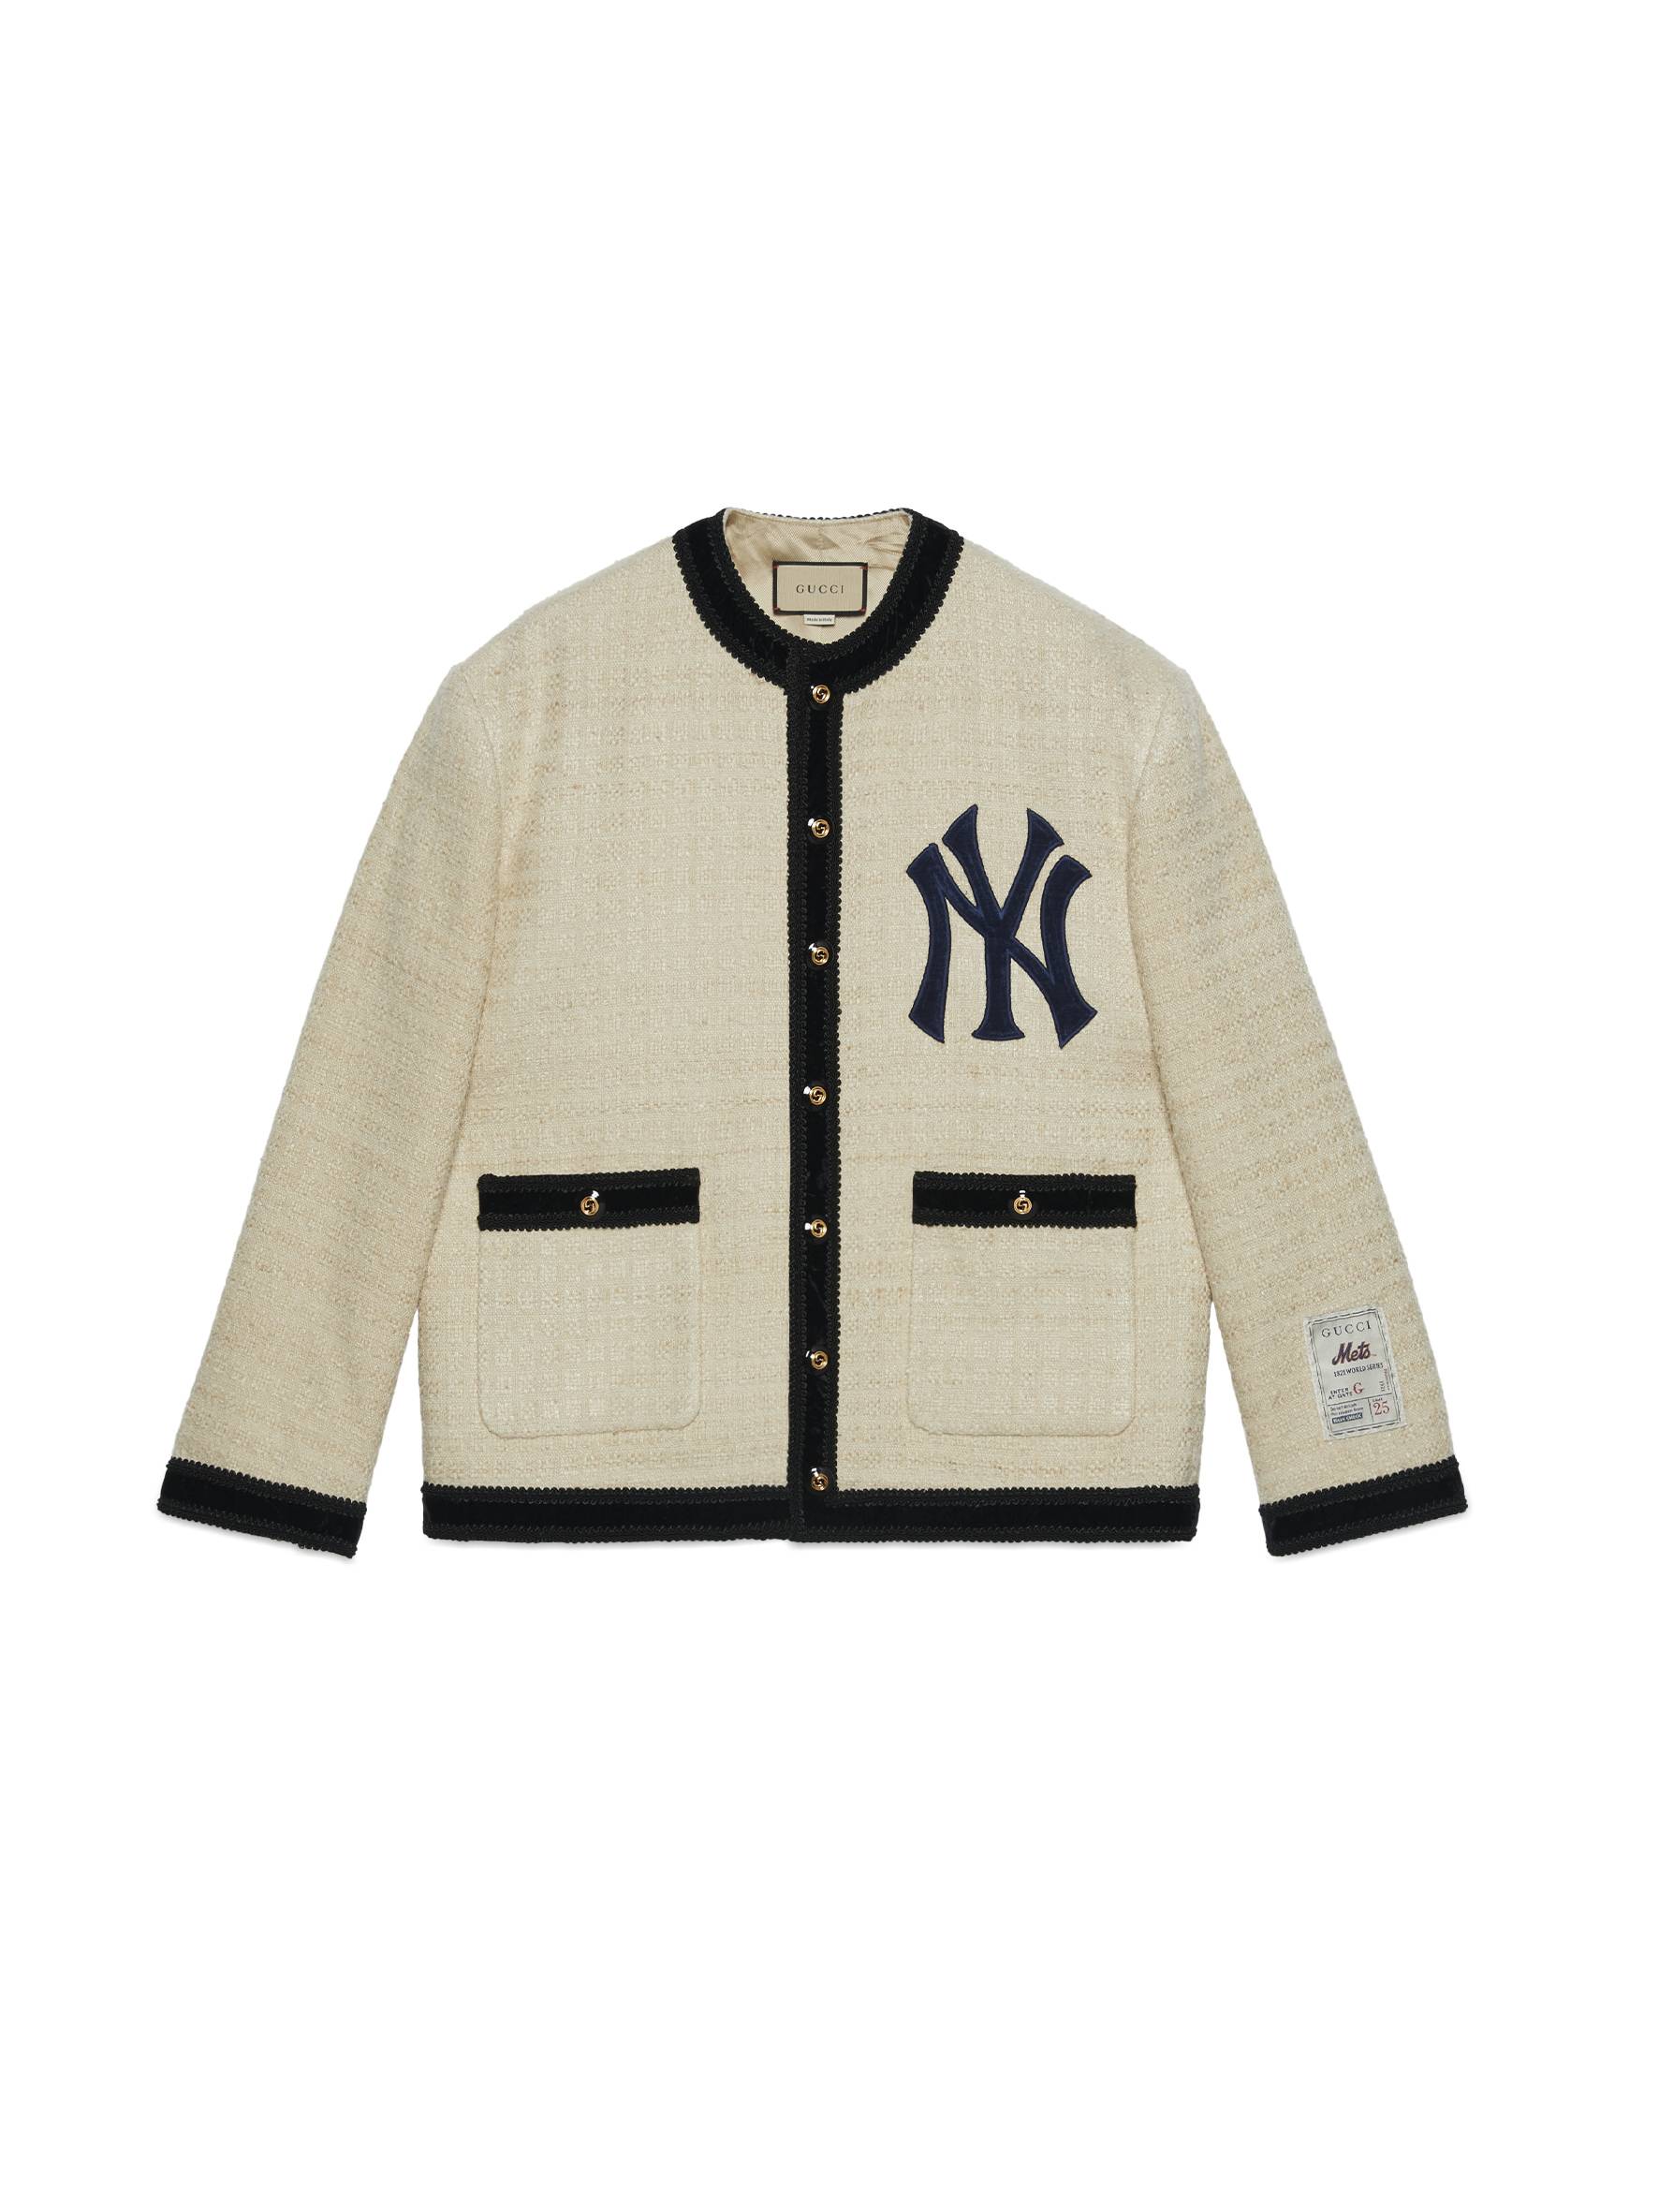 Gucci New York Yankees